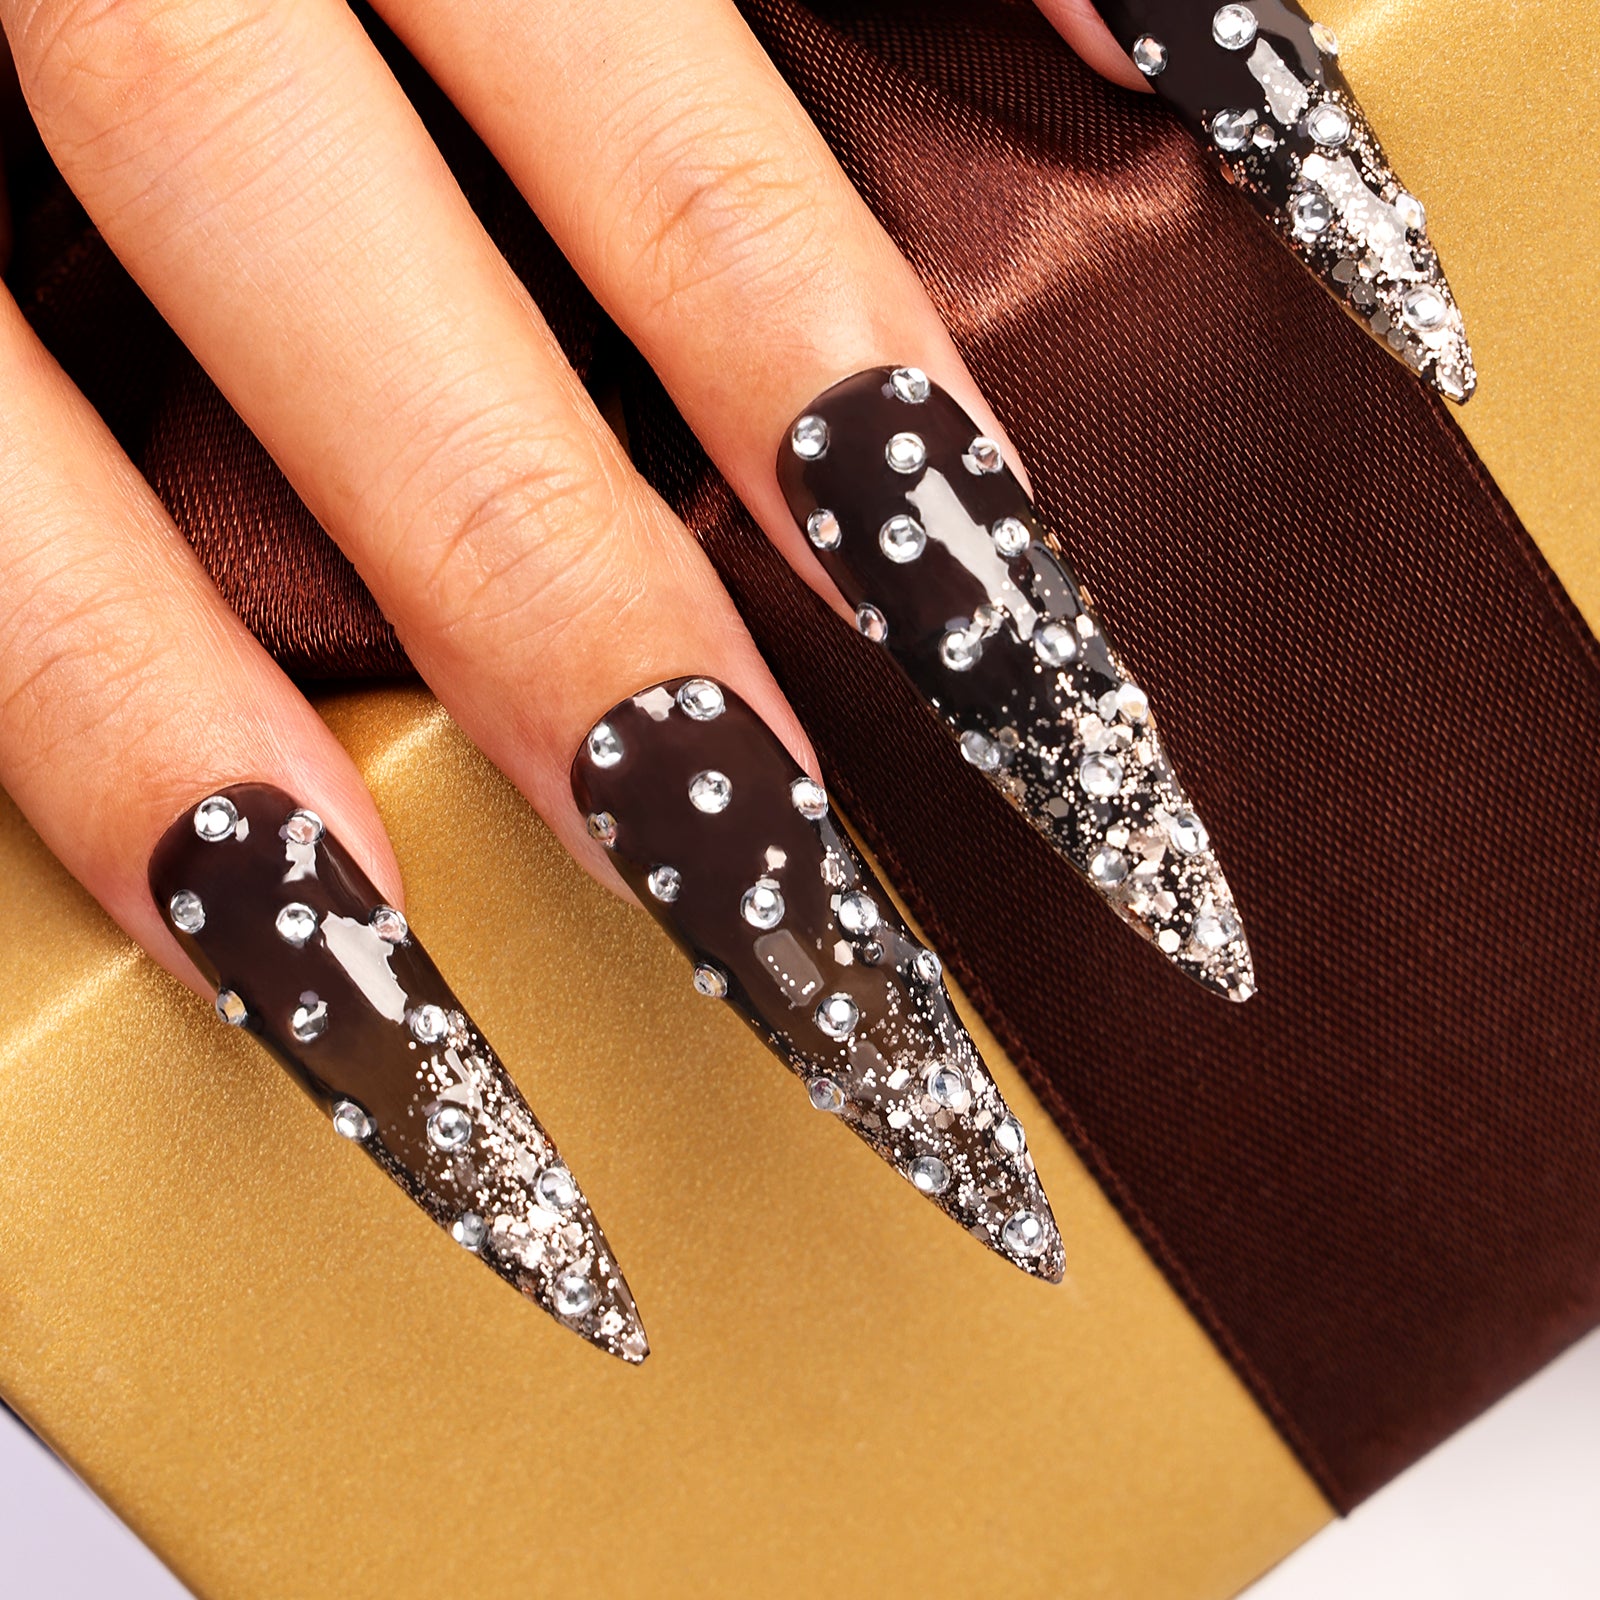 Shiny Obsidian Stiletto Long Press On Nails | MelodySusie